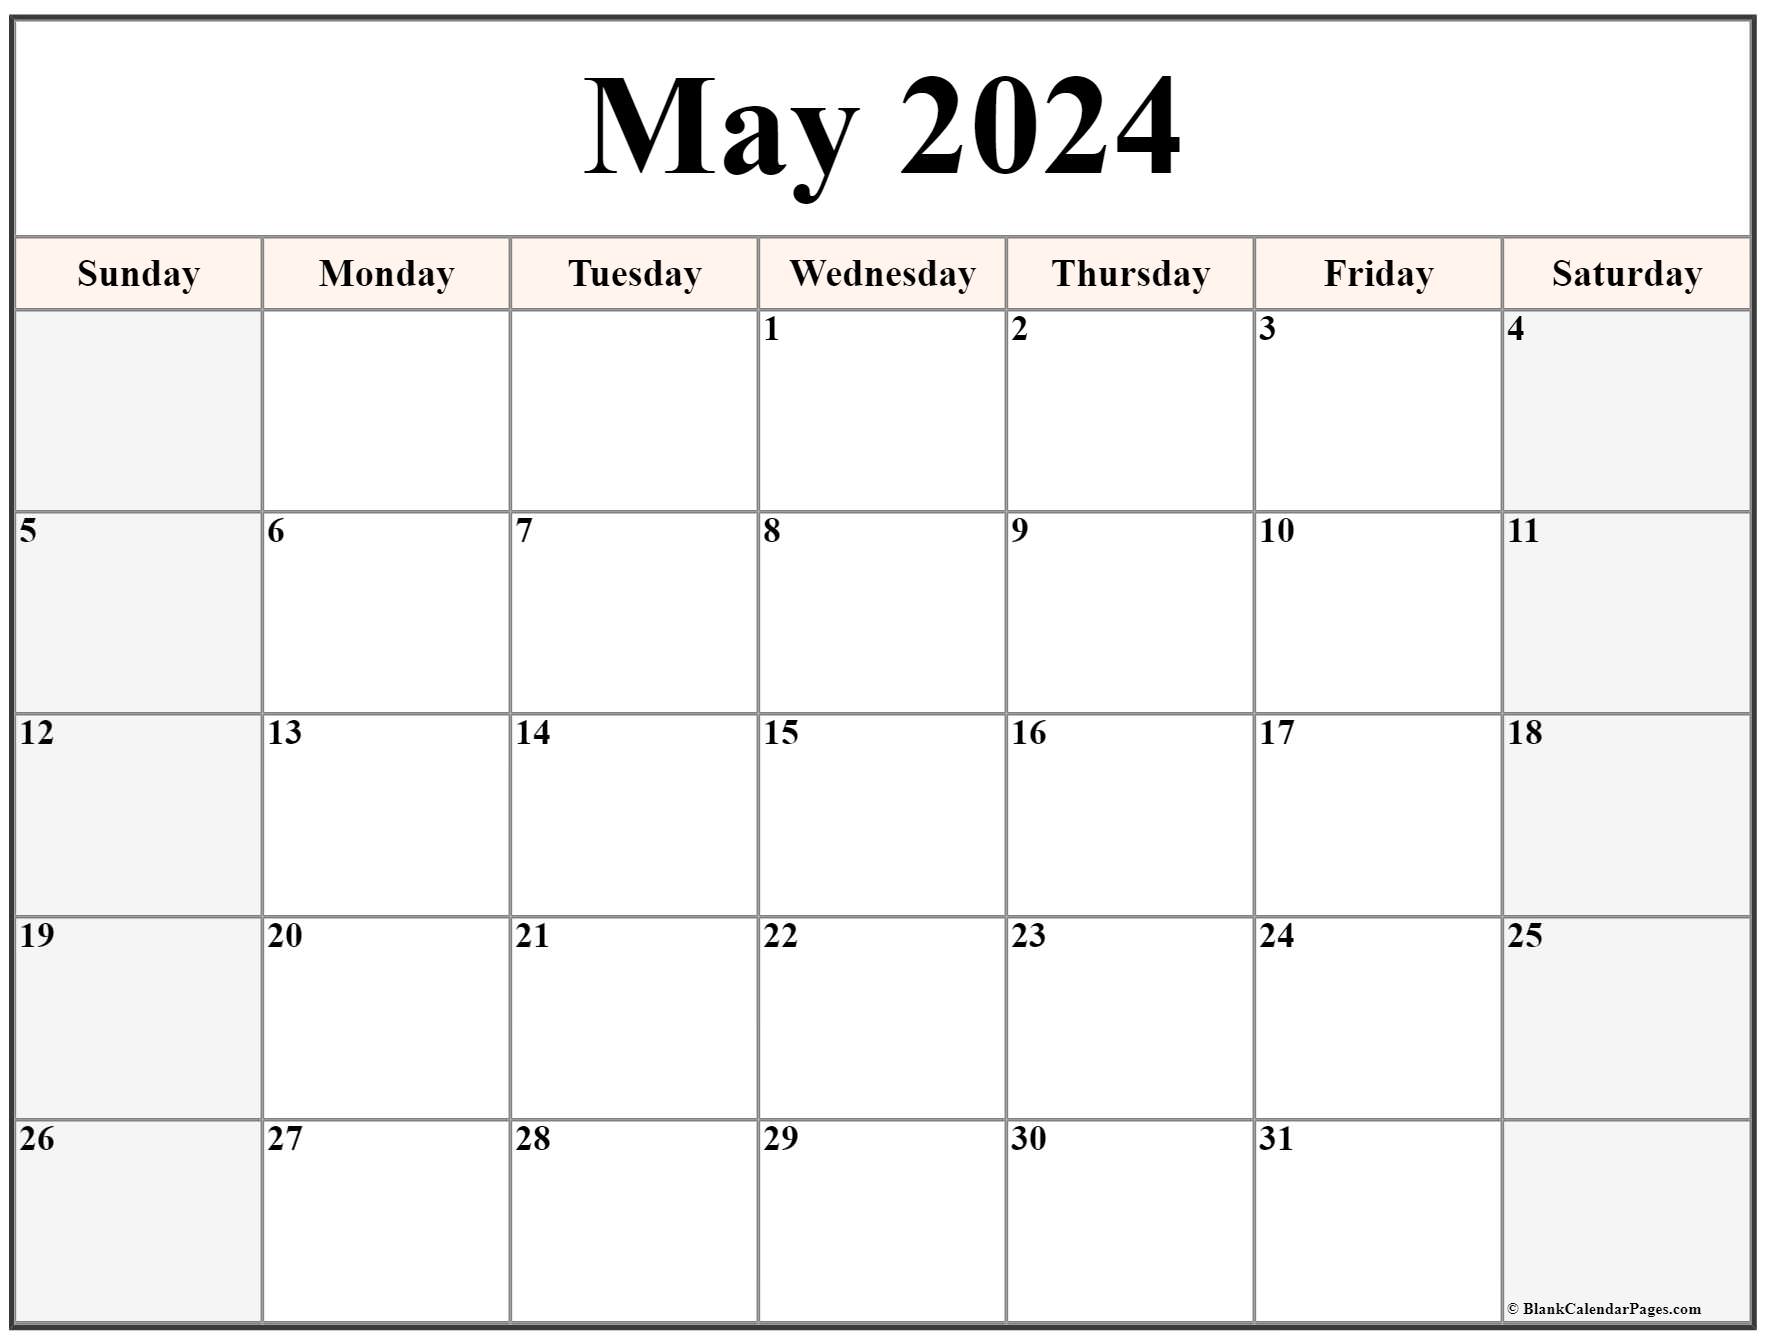 Free May 2022 Calendar Template May 2022 Calendar | Free Printable Calendar Templates